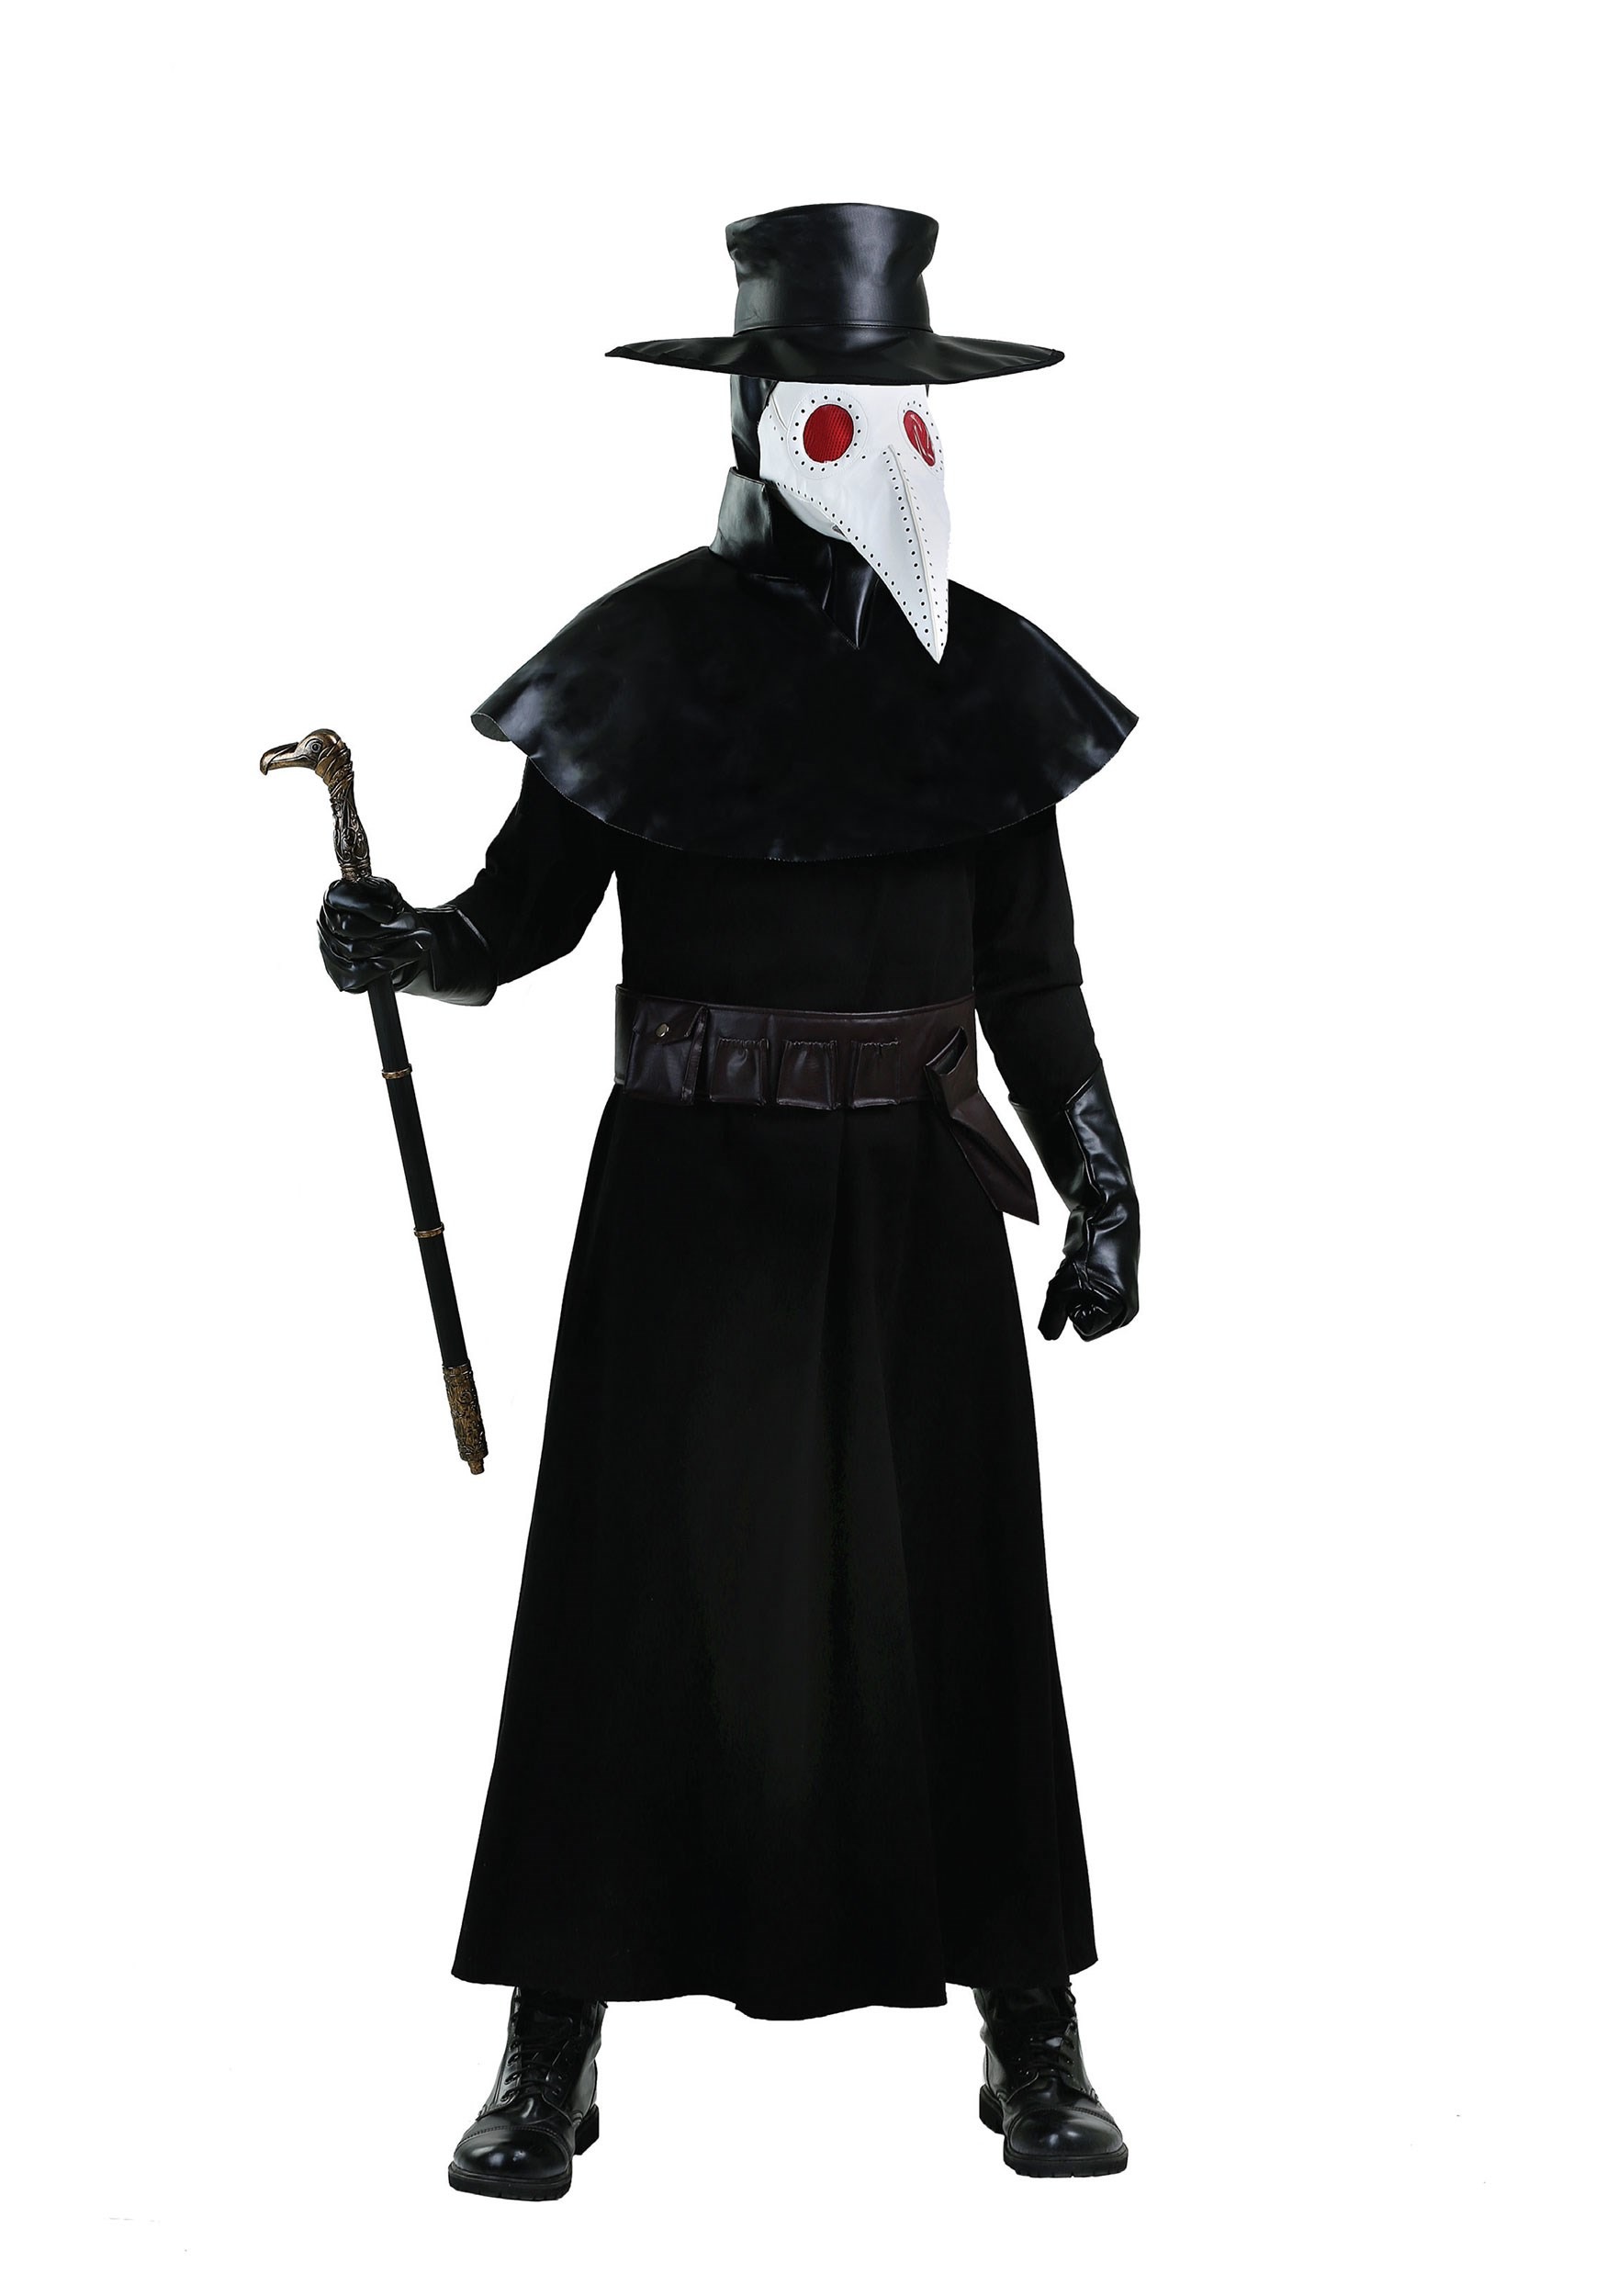 Photos - Fancy Dress FUN Costumes Plus Size Plague Doctor Costume for Adults Black FUN6900PL